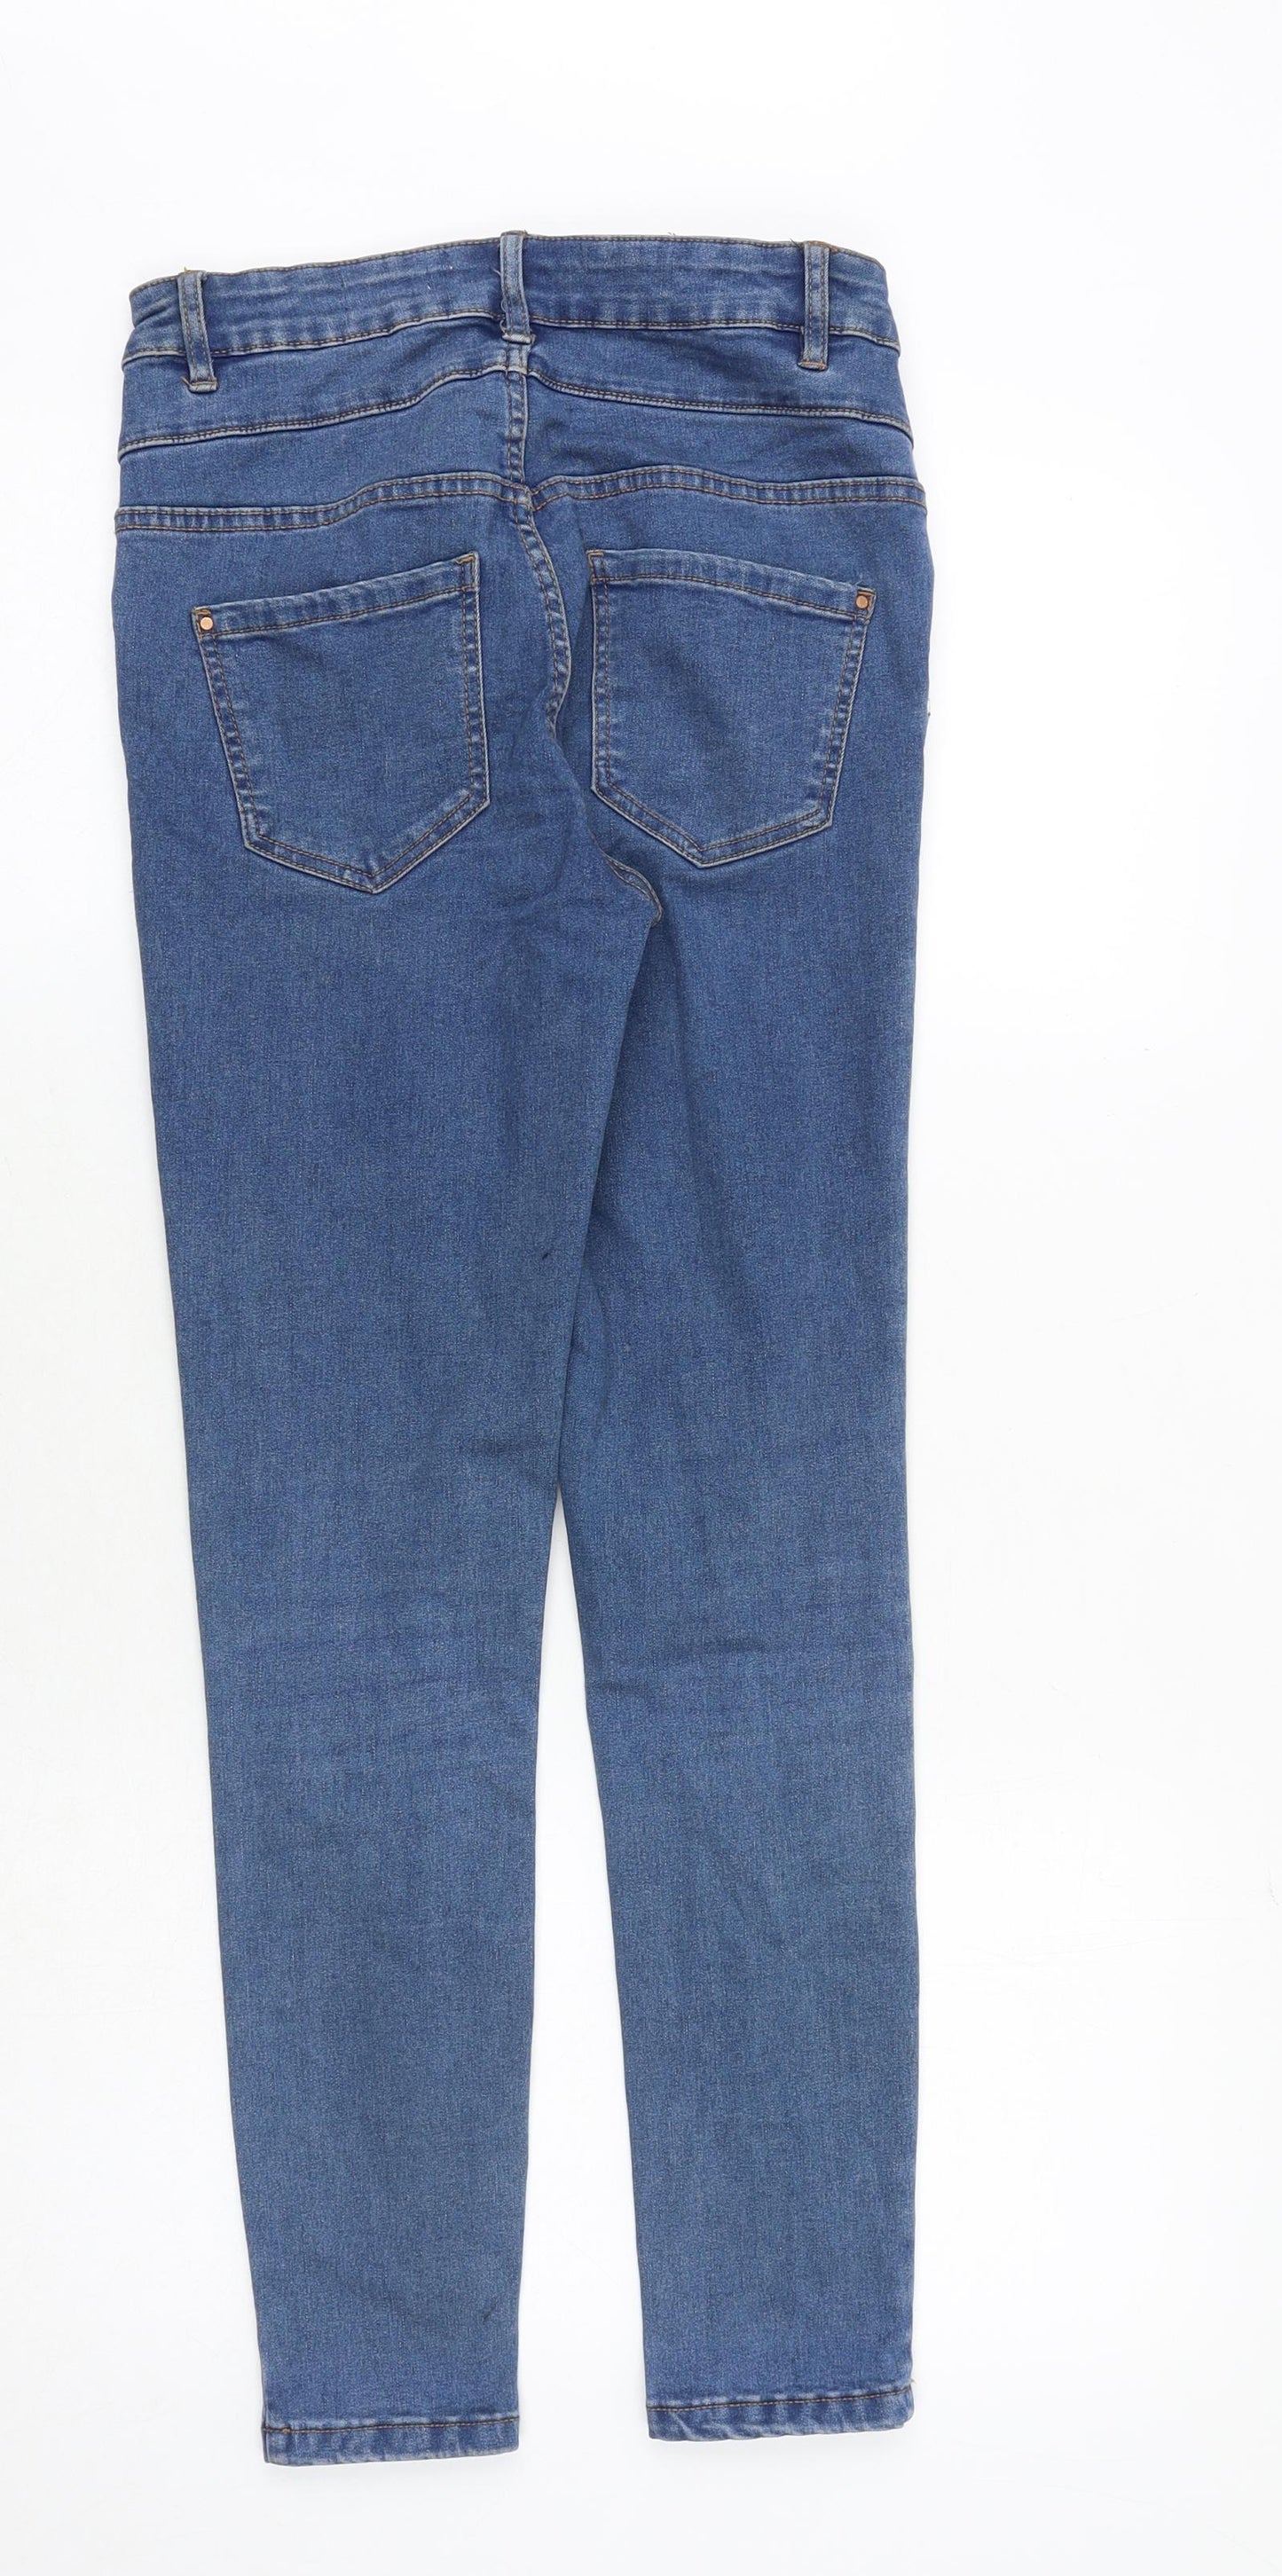 New Look Womens Blue Cotton Skinny Jeans Size 8 Slim Zip